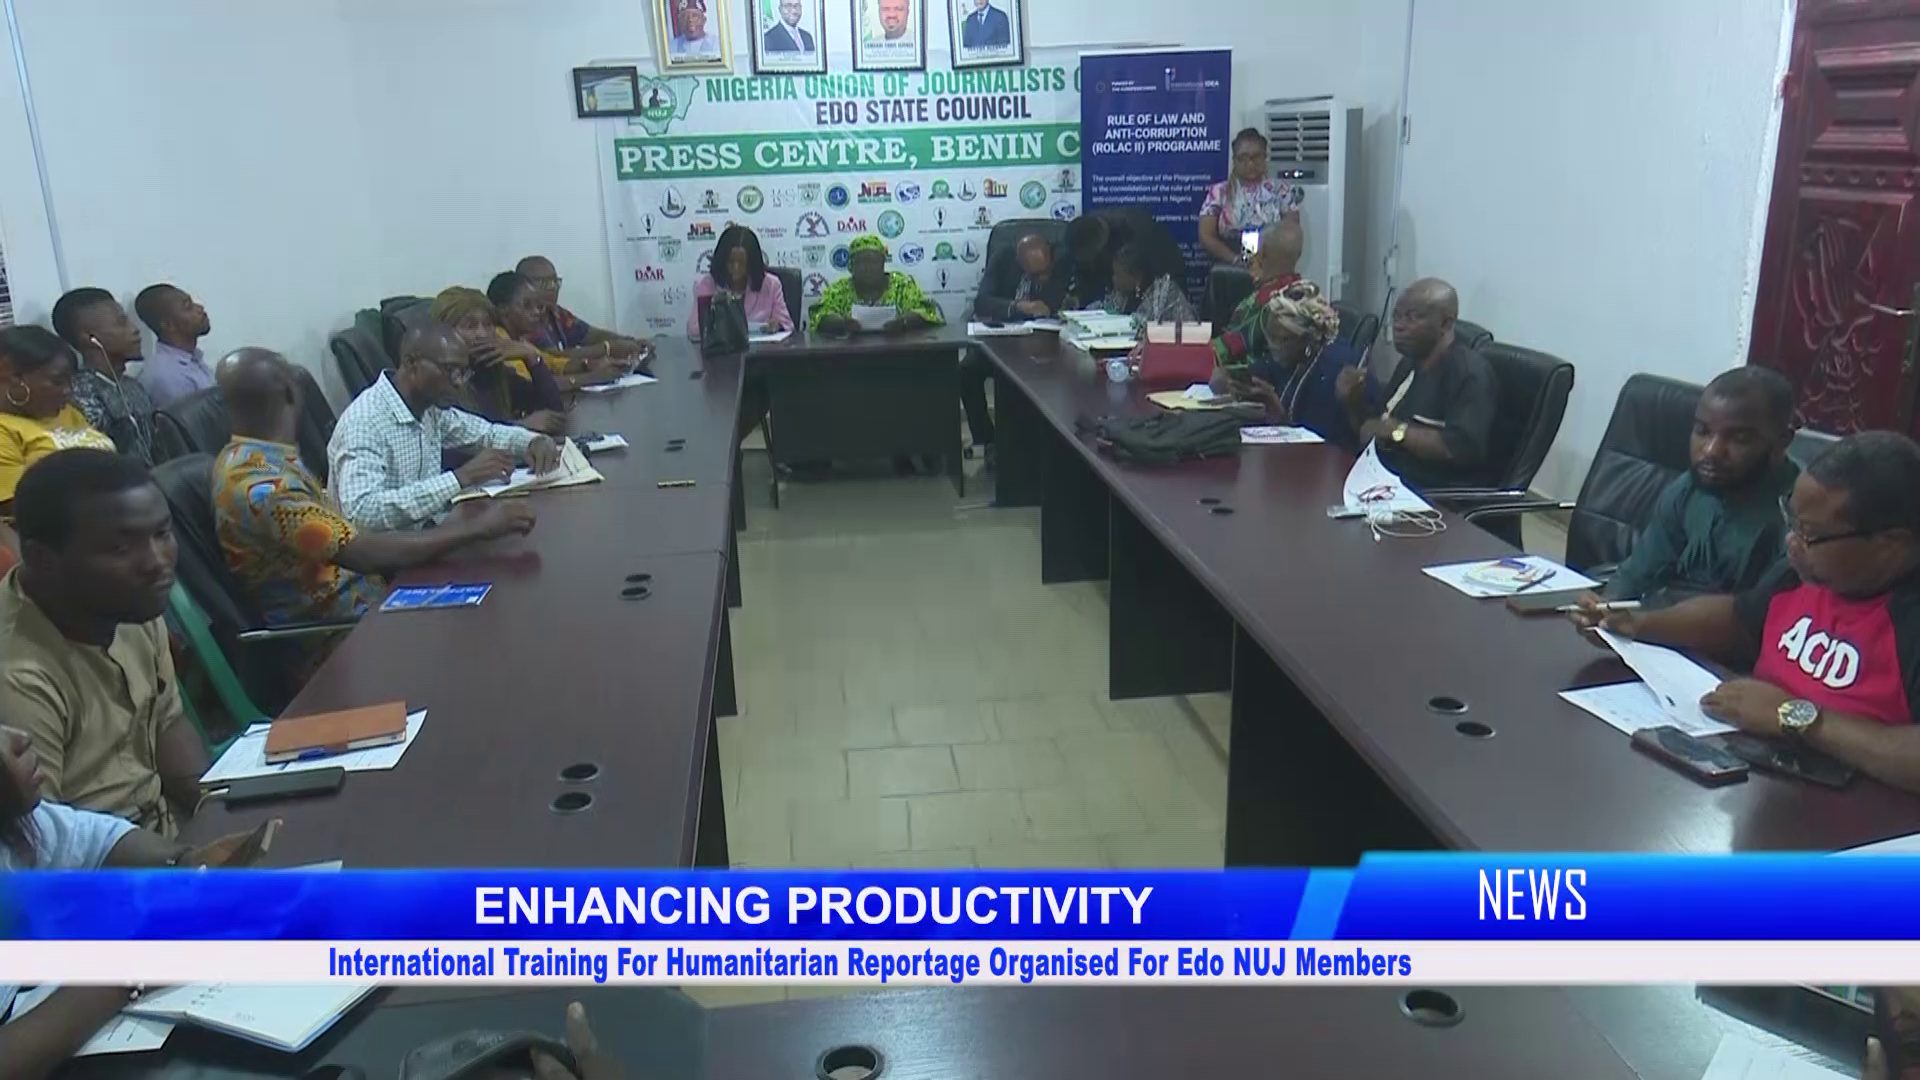 Enhancing Productivity: International Training For Humanitarian Reportage Organised For Edo NUJ Members